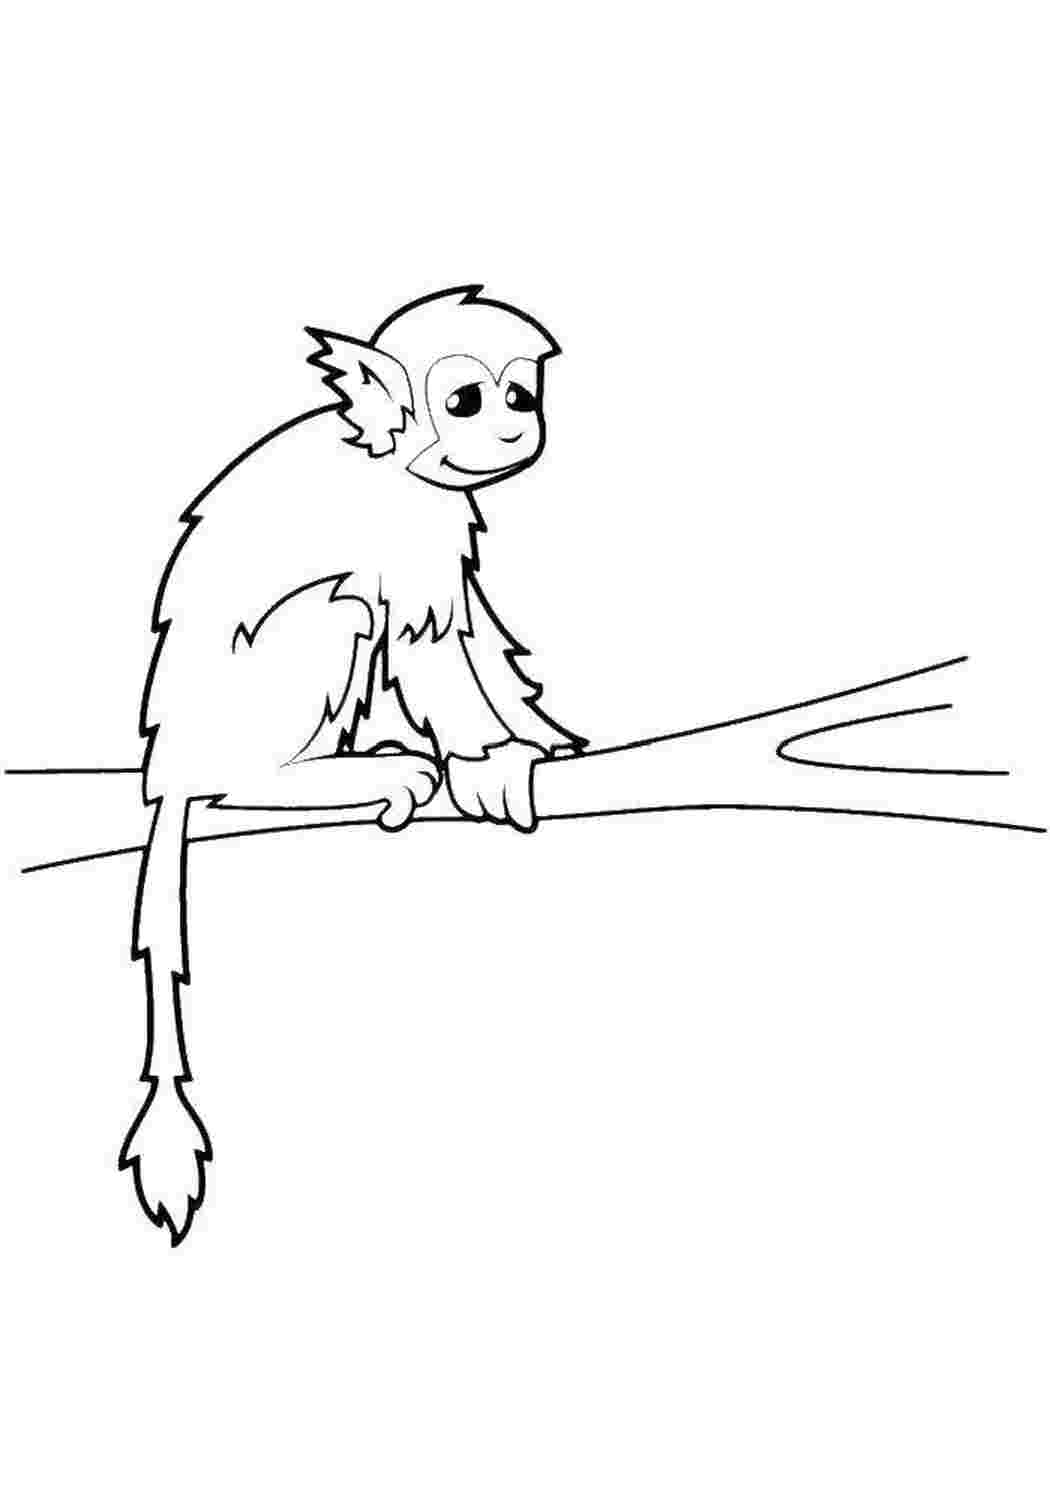 Житков про обезьянку иллюстрации 3 класс. Житков про обезьянку 3 класс. Яшка Житков. Обезьяна раскраска. Обезьяна раскраска для детей.